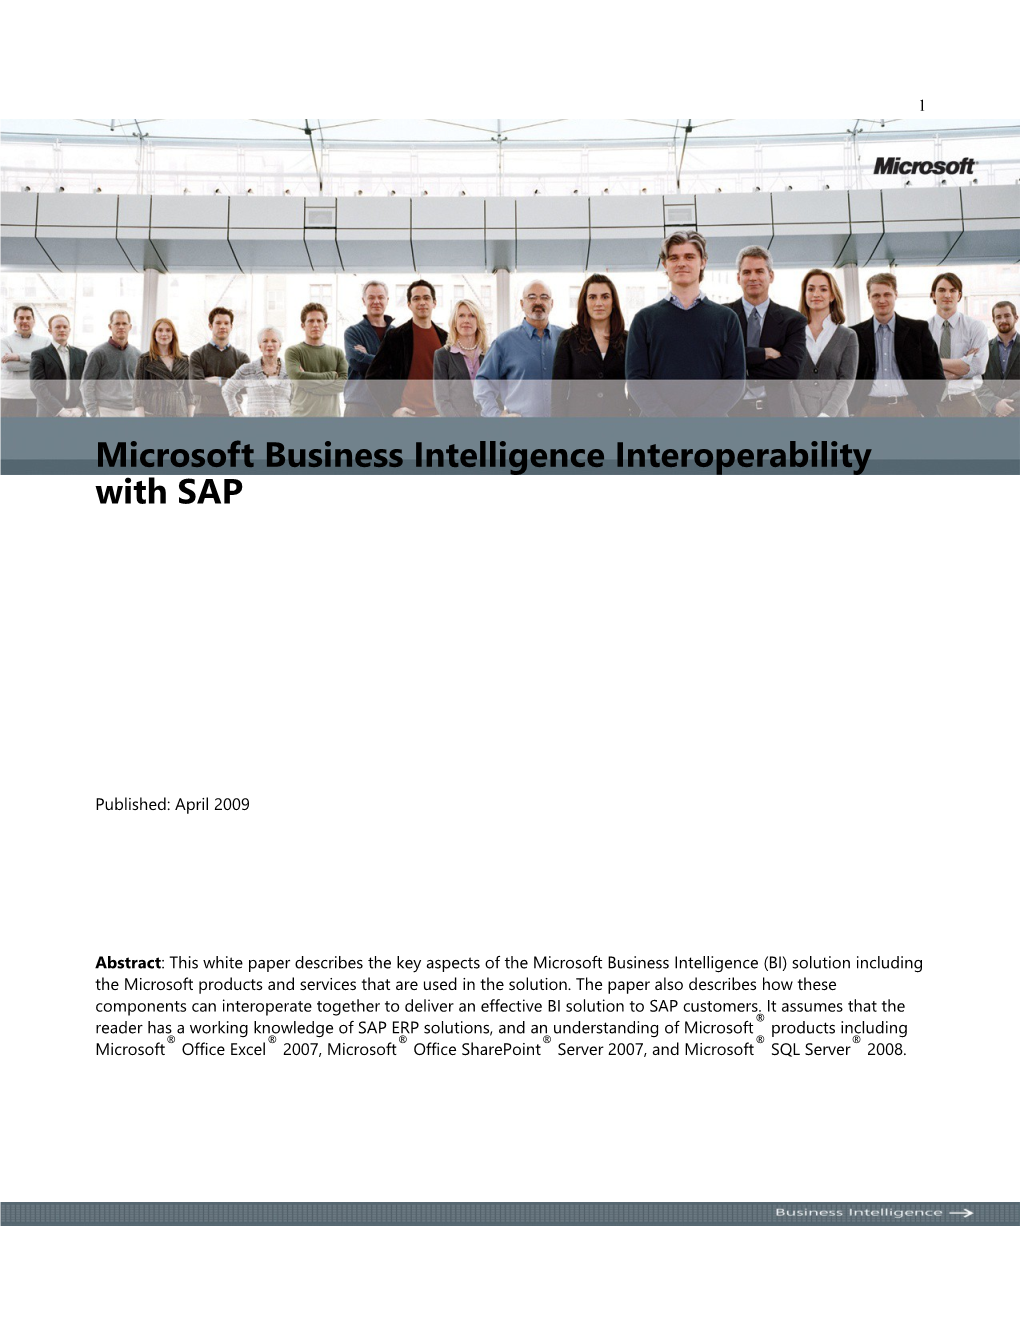 Microsoft Business Intelligence Interoperabilitywith SAP